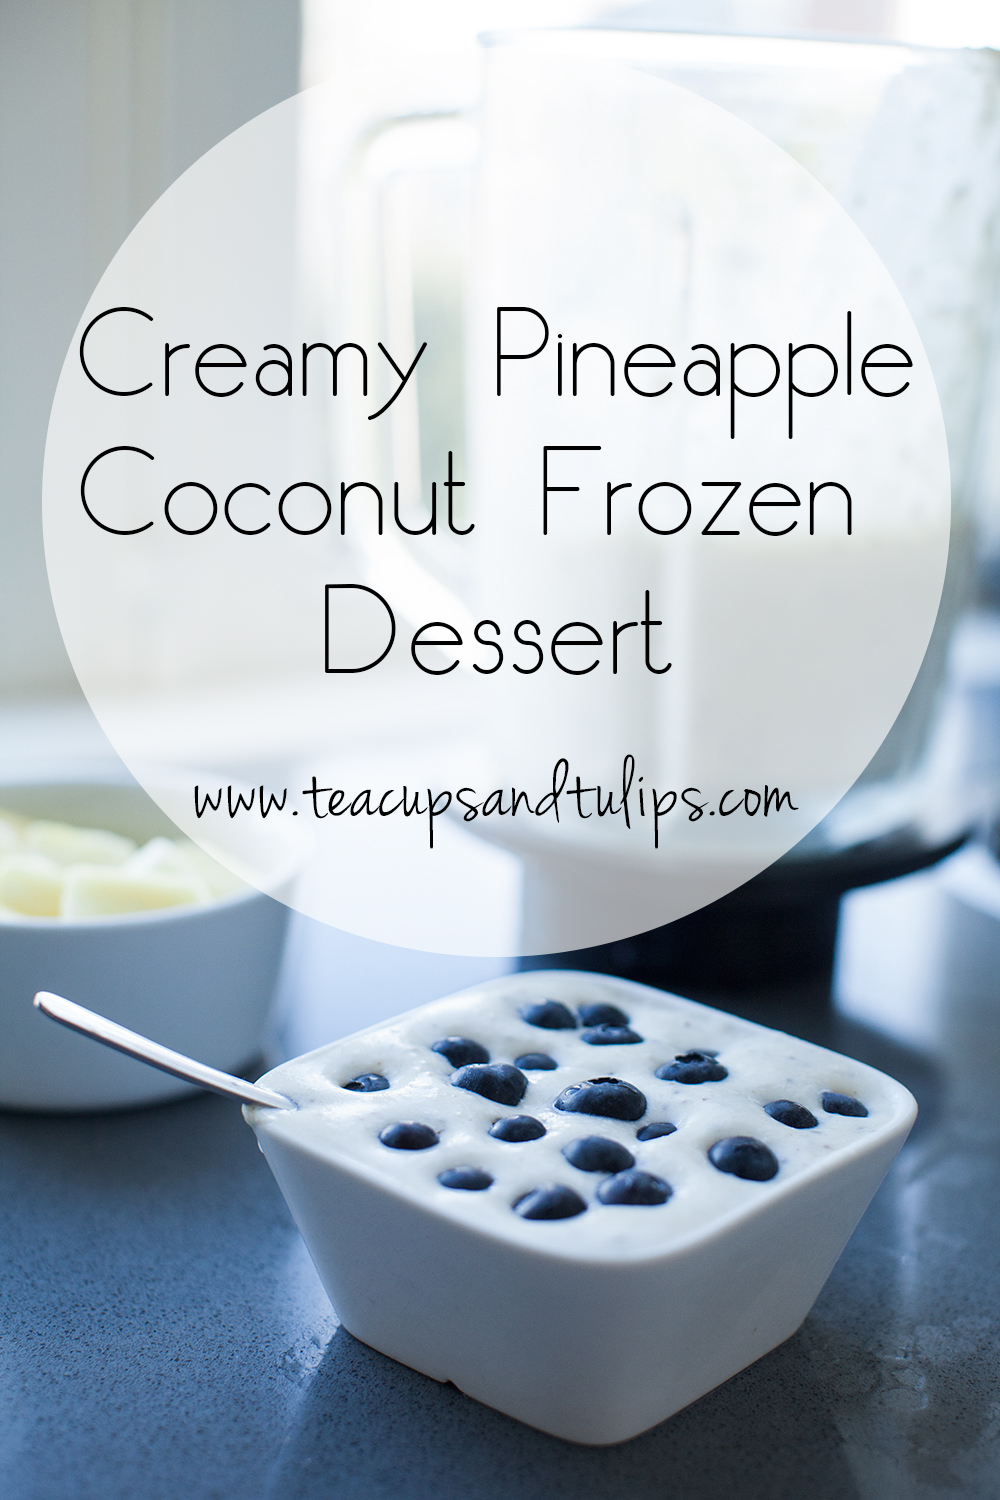 Creamy coconut frozen dessert